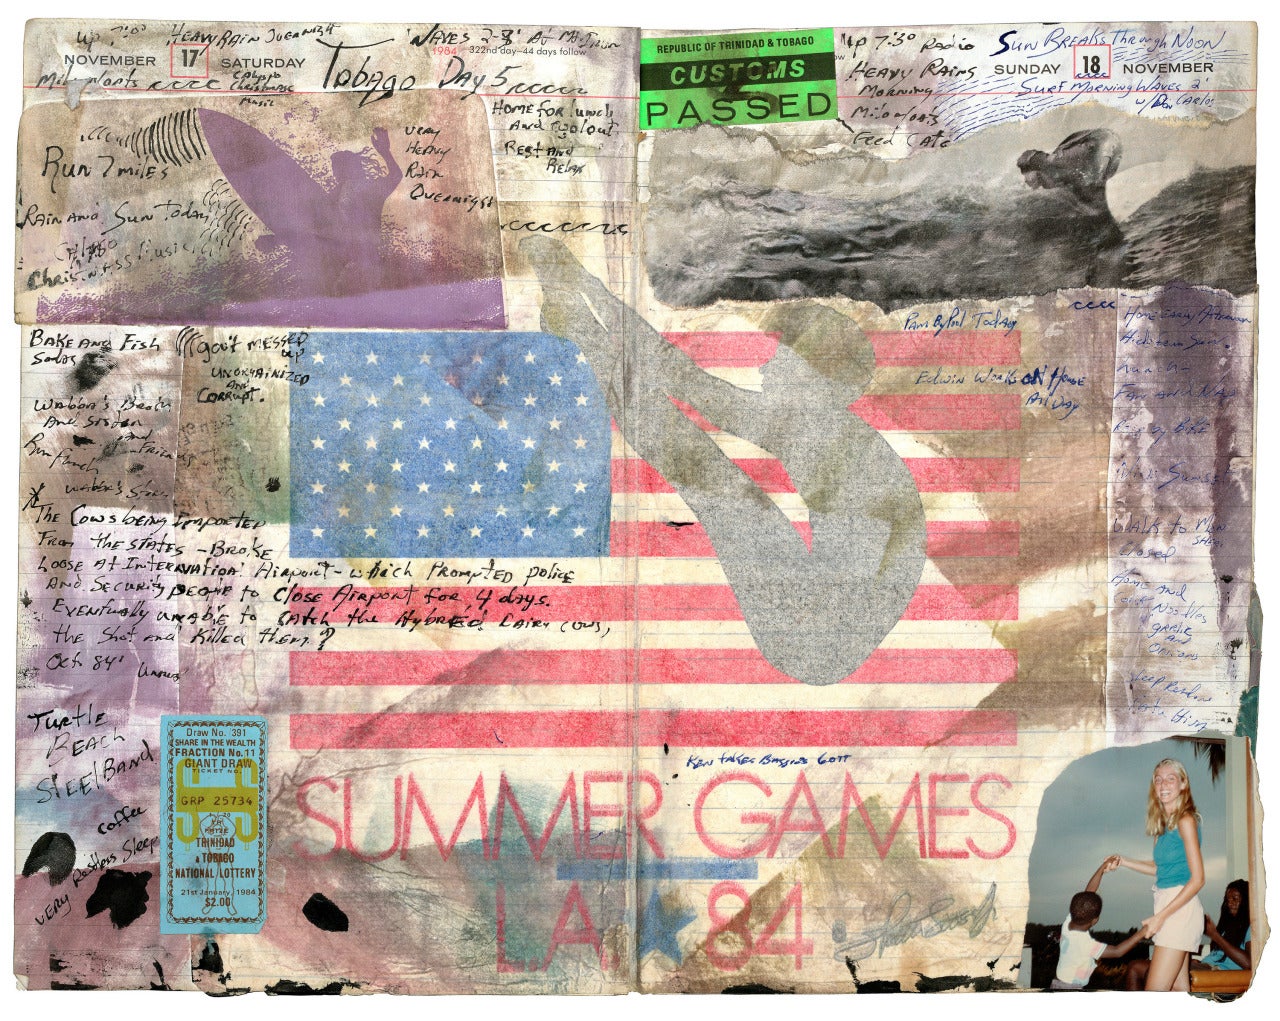 The Surf Journals: Summer Games, November 17-18 - Mixed Media Art by Tony Caramanico